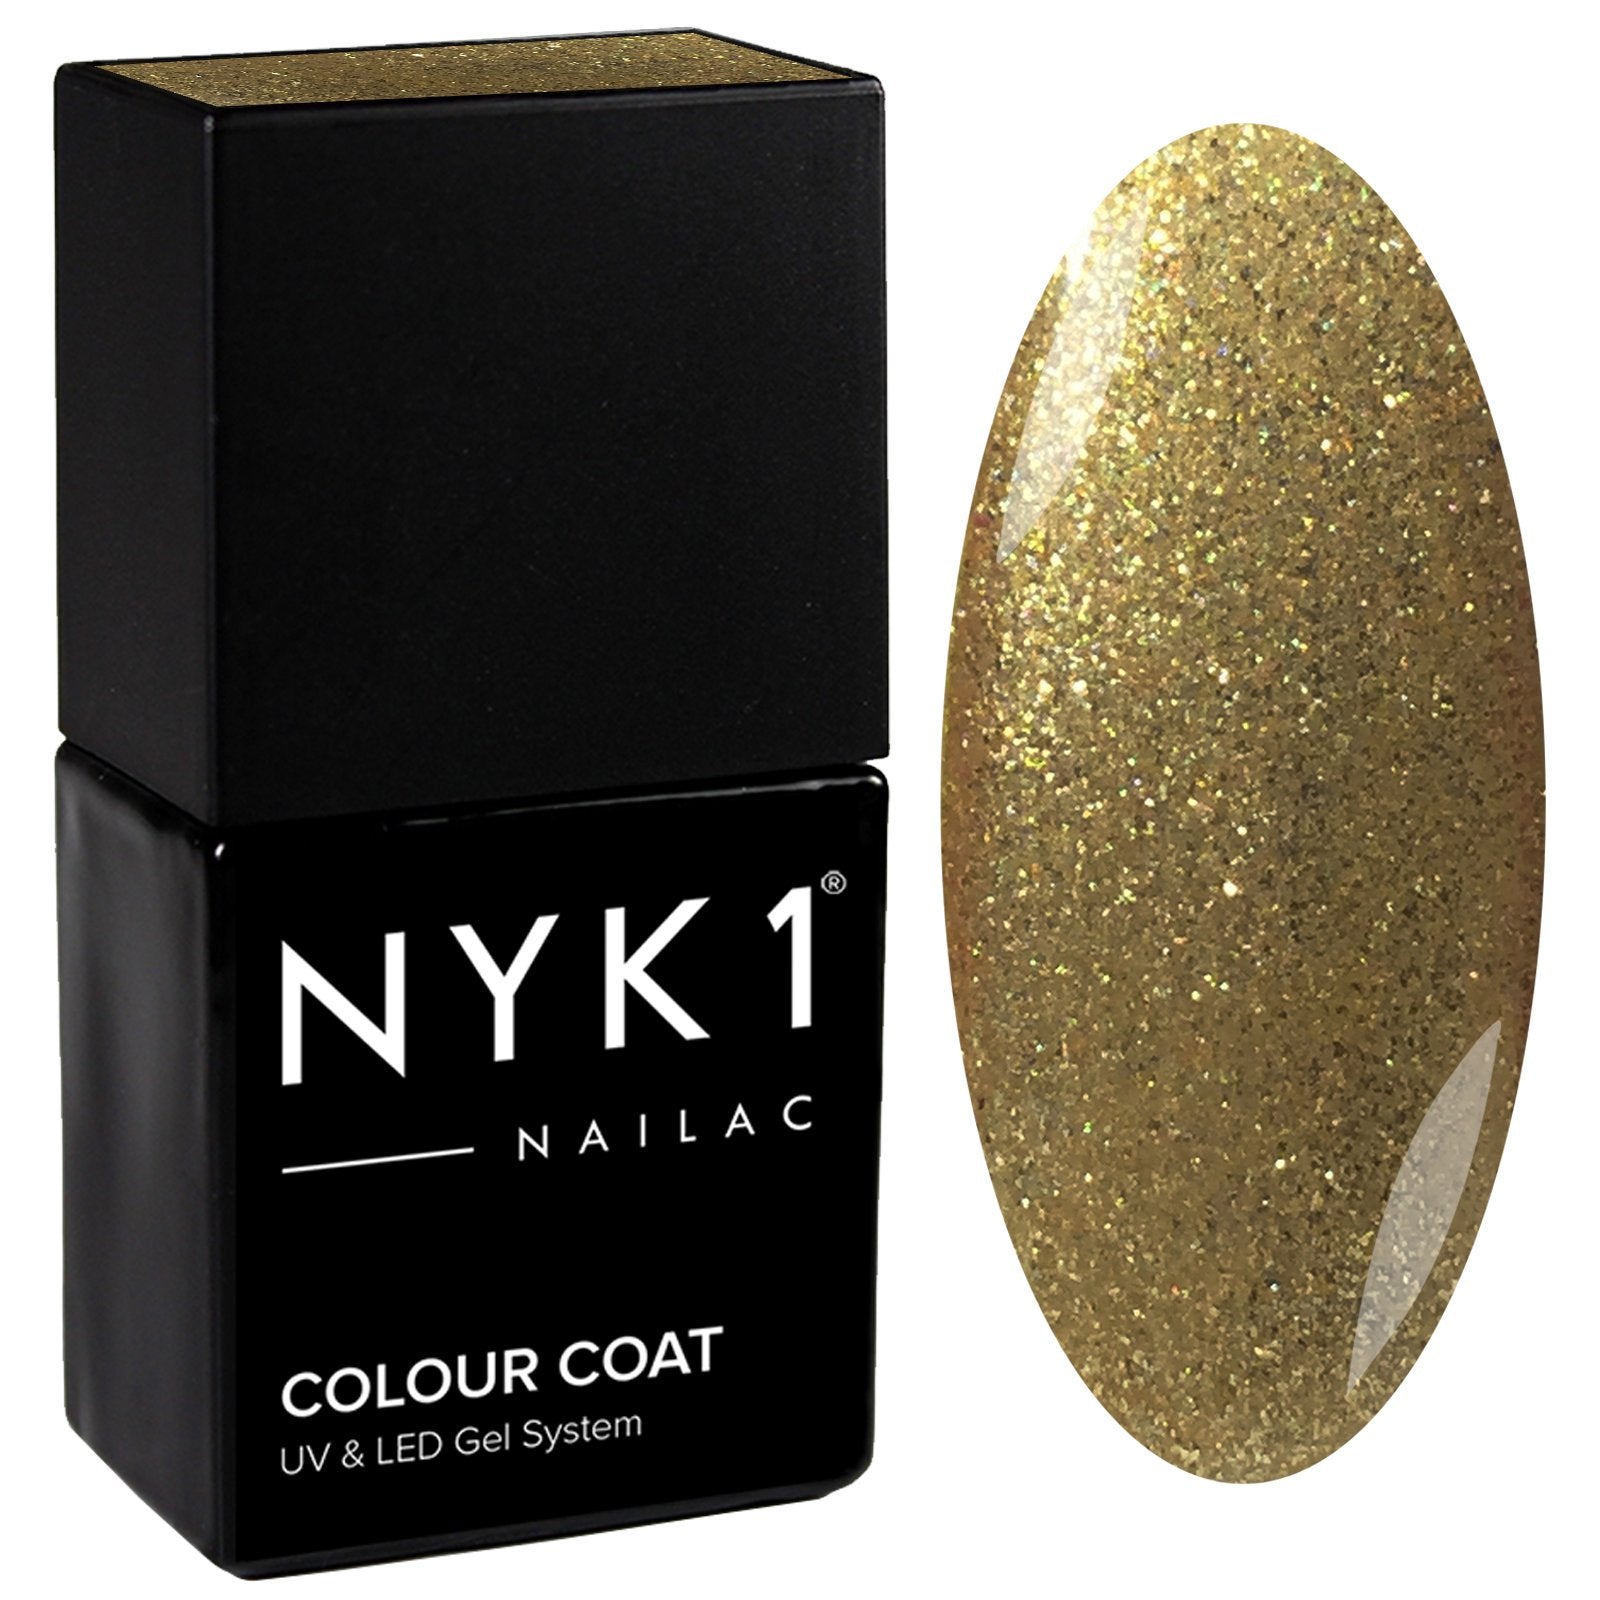 NYK1 Gold Wow Glitter Sparkle Gel Nail Polish